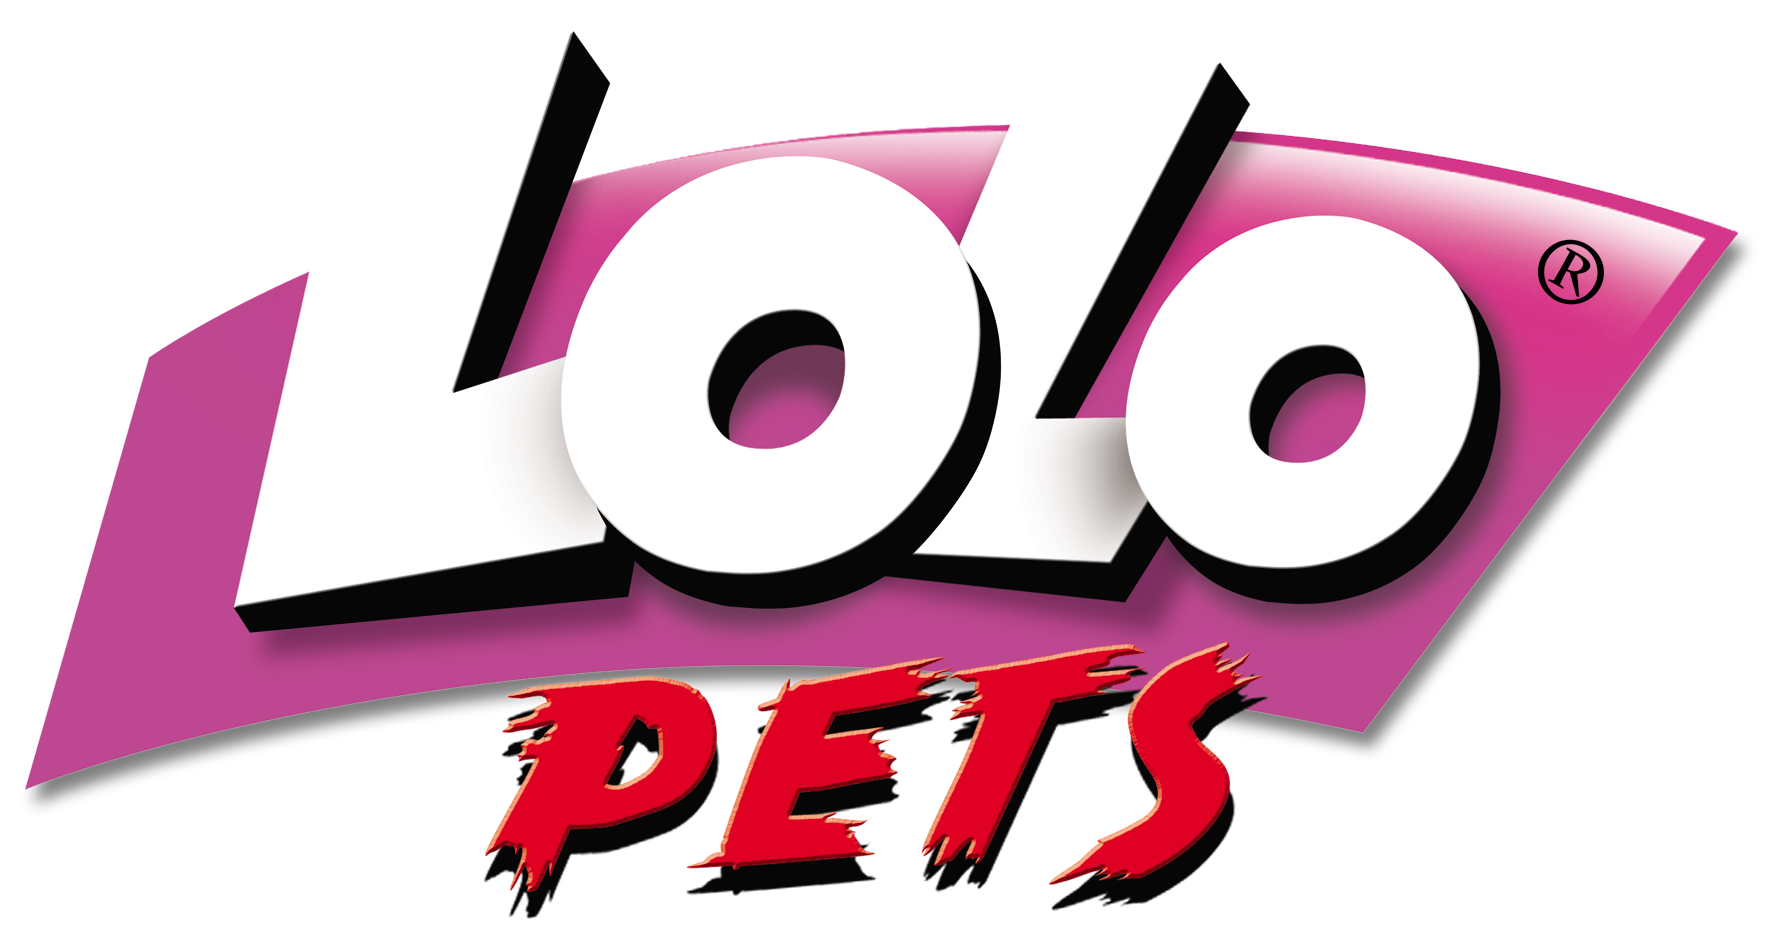 Lolo's. ЛОЛОПЕТ. Логотипы lo lo. Lolo Pets корм. Лоло лого.